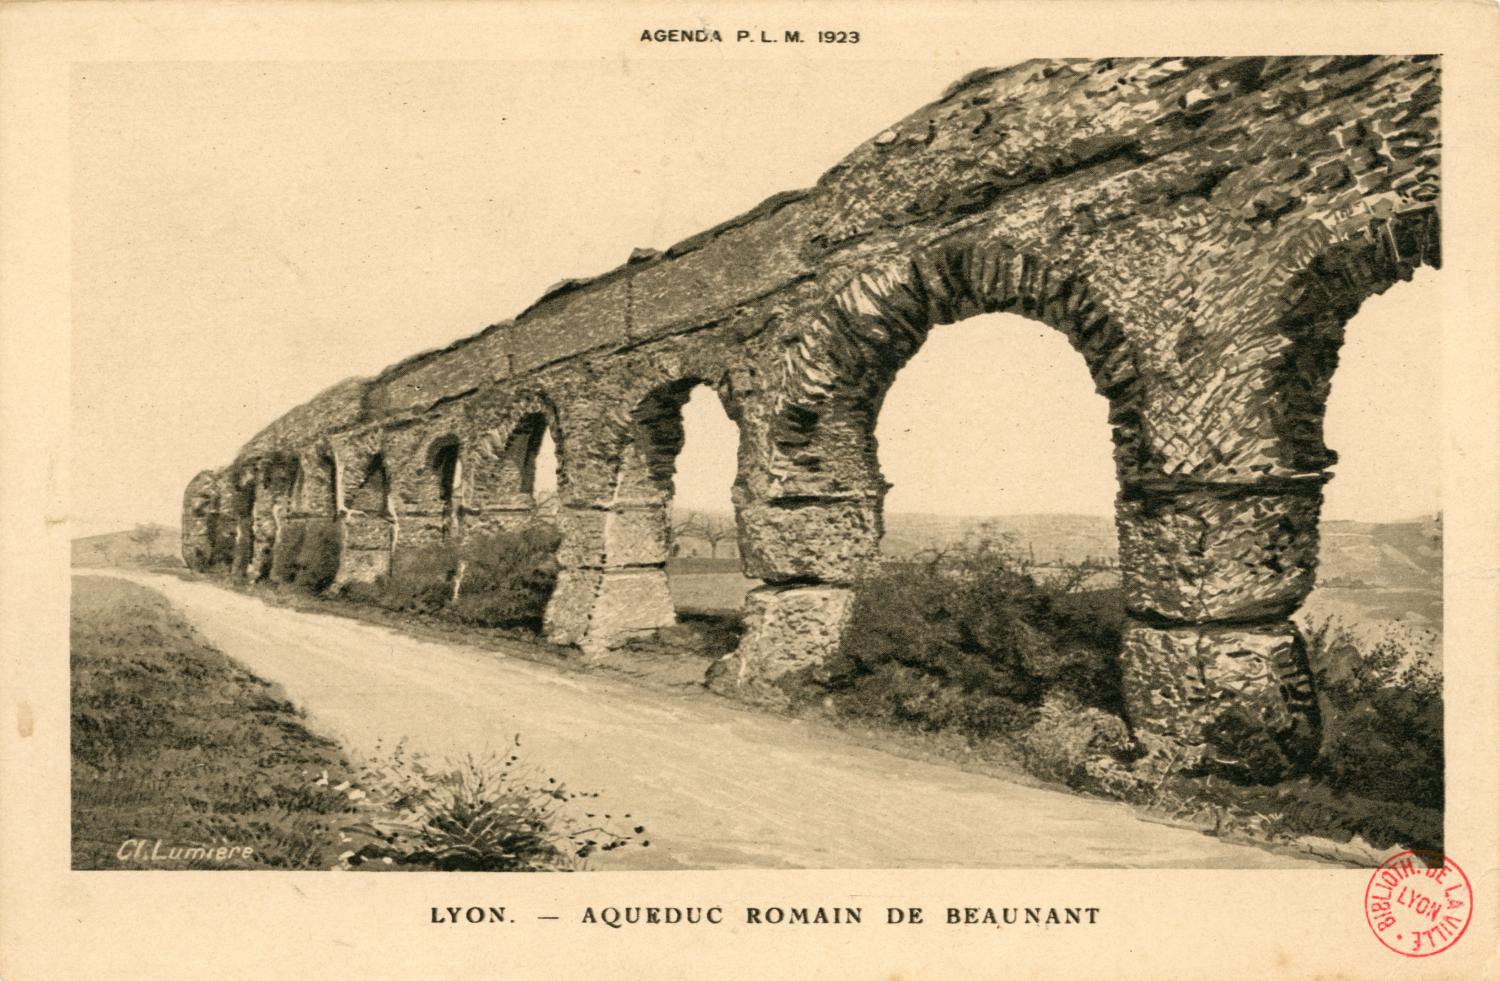 Lyon. - Aqueduc romain de Beaunant